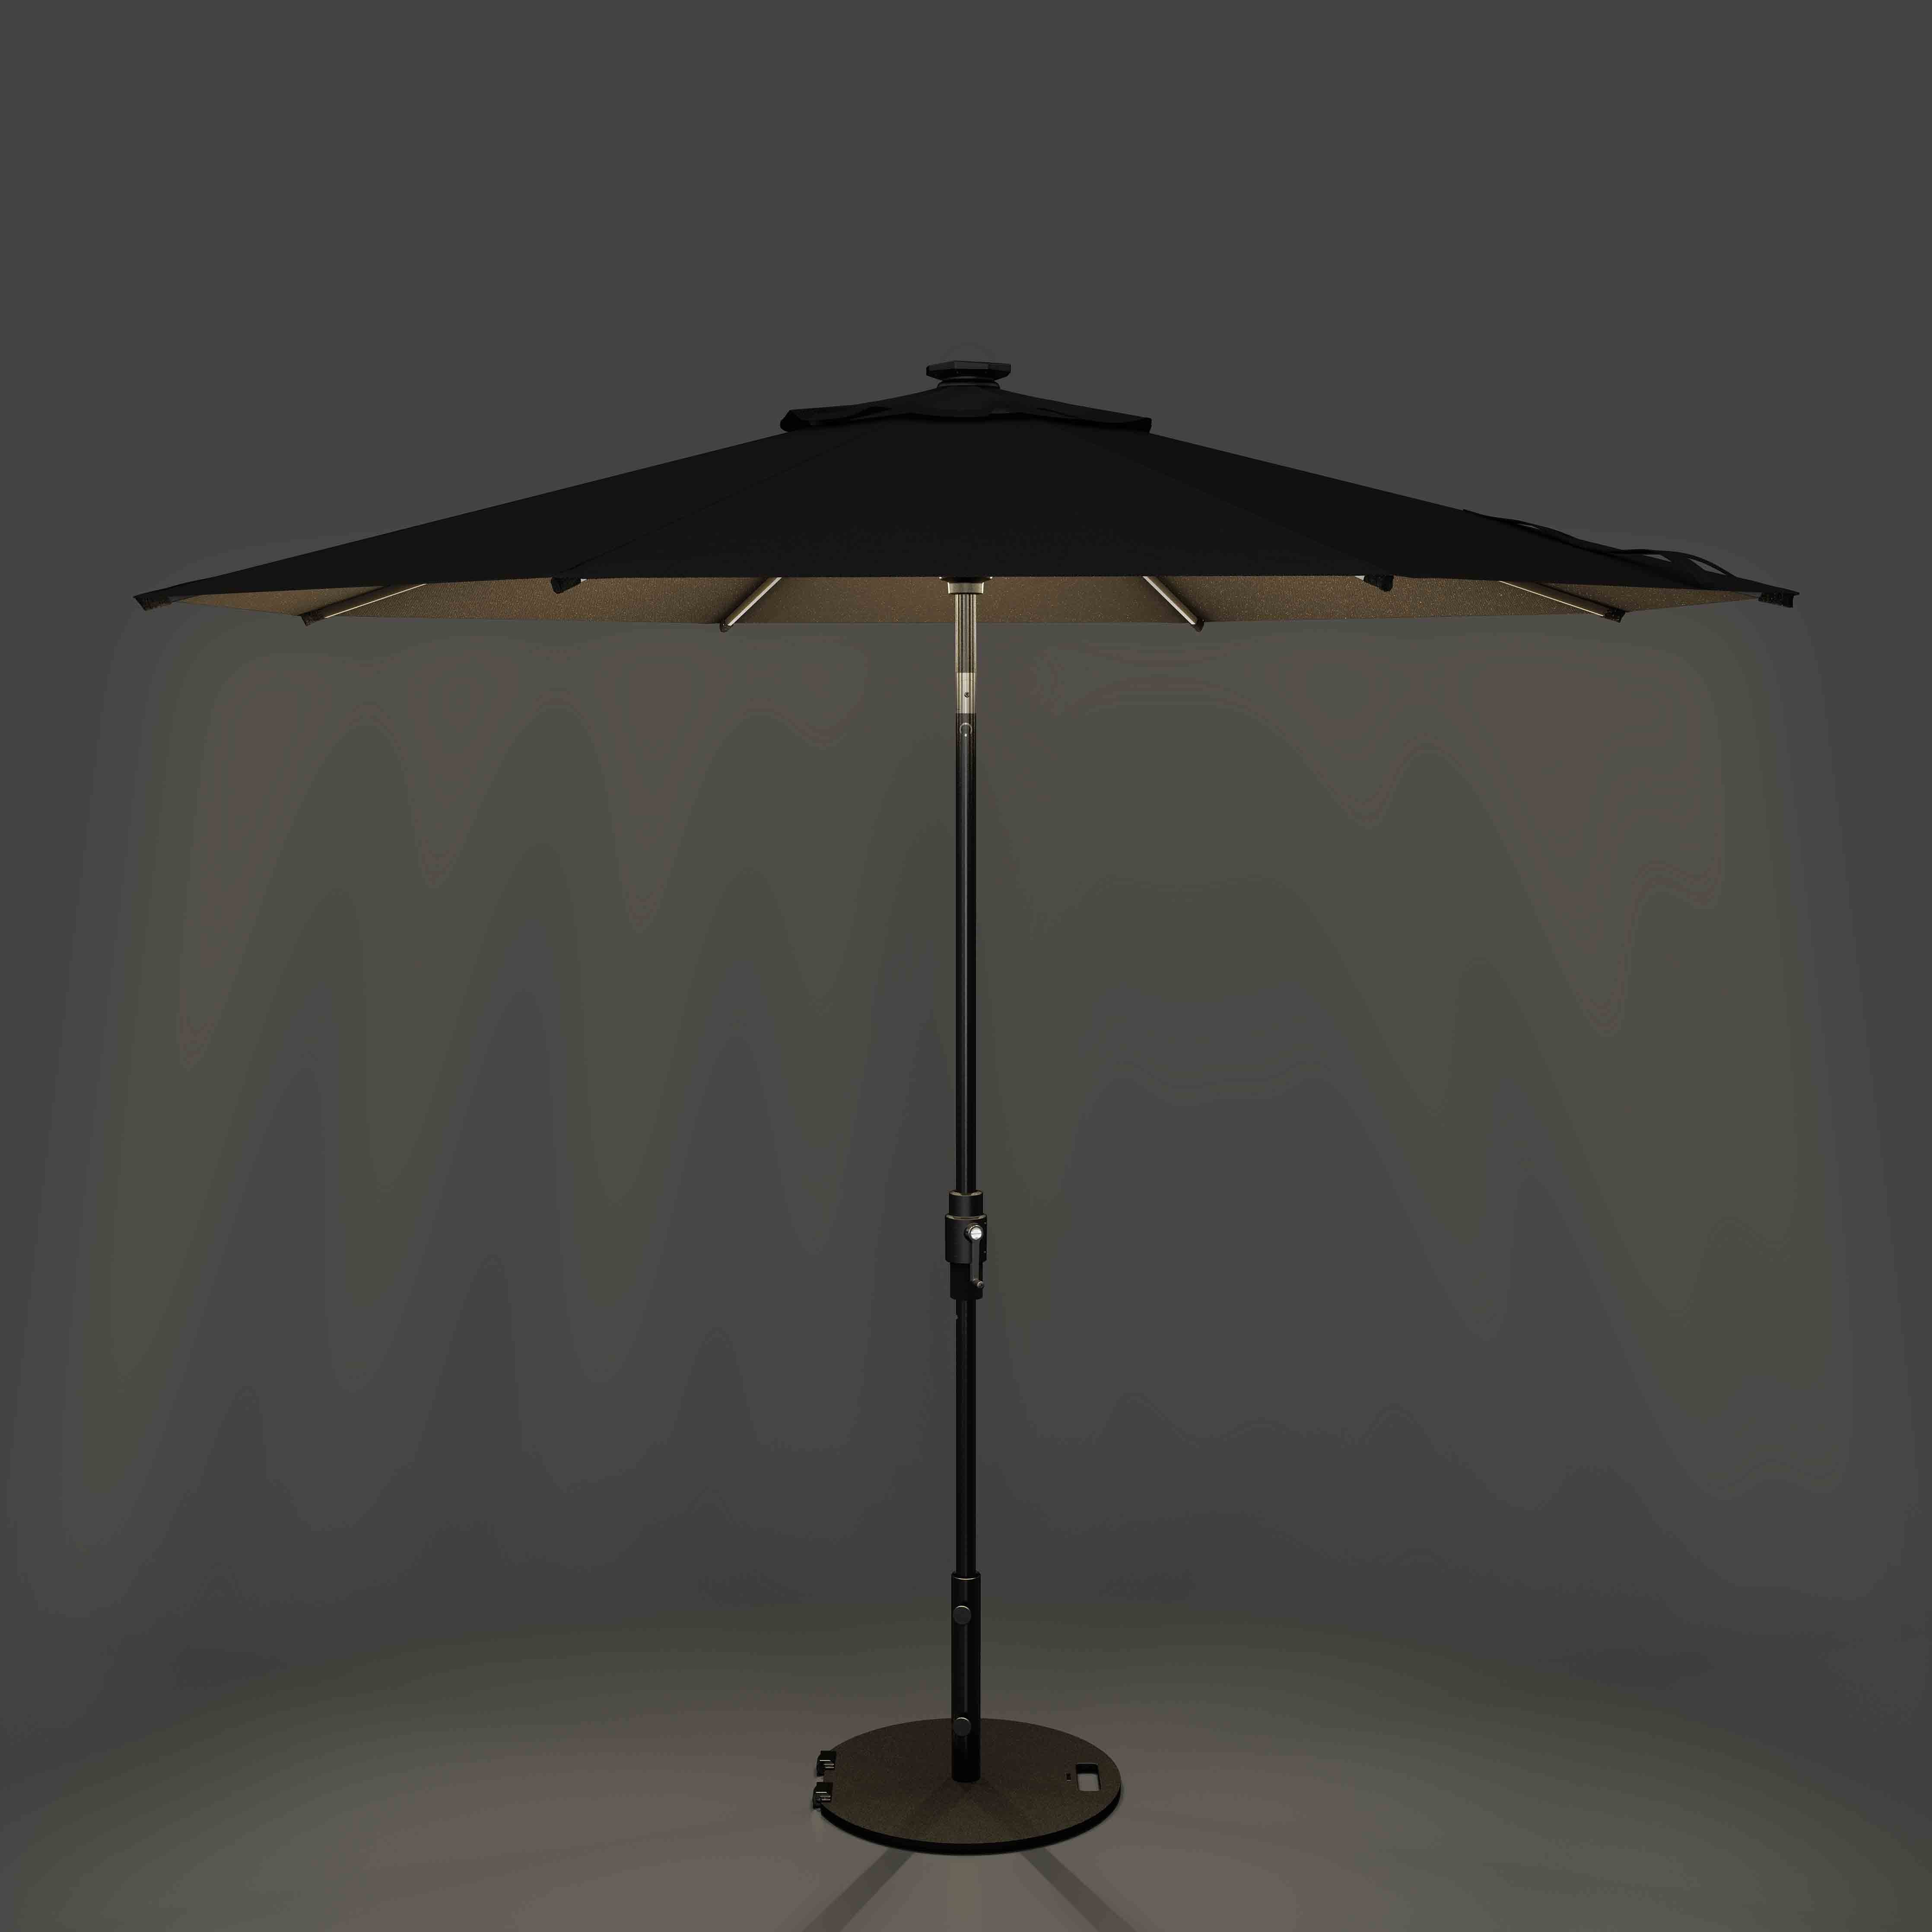 The LED Swilt™ - Sunbrella Black